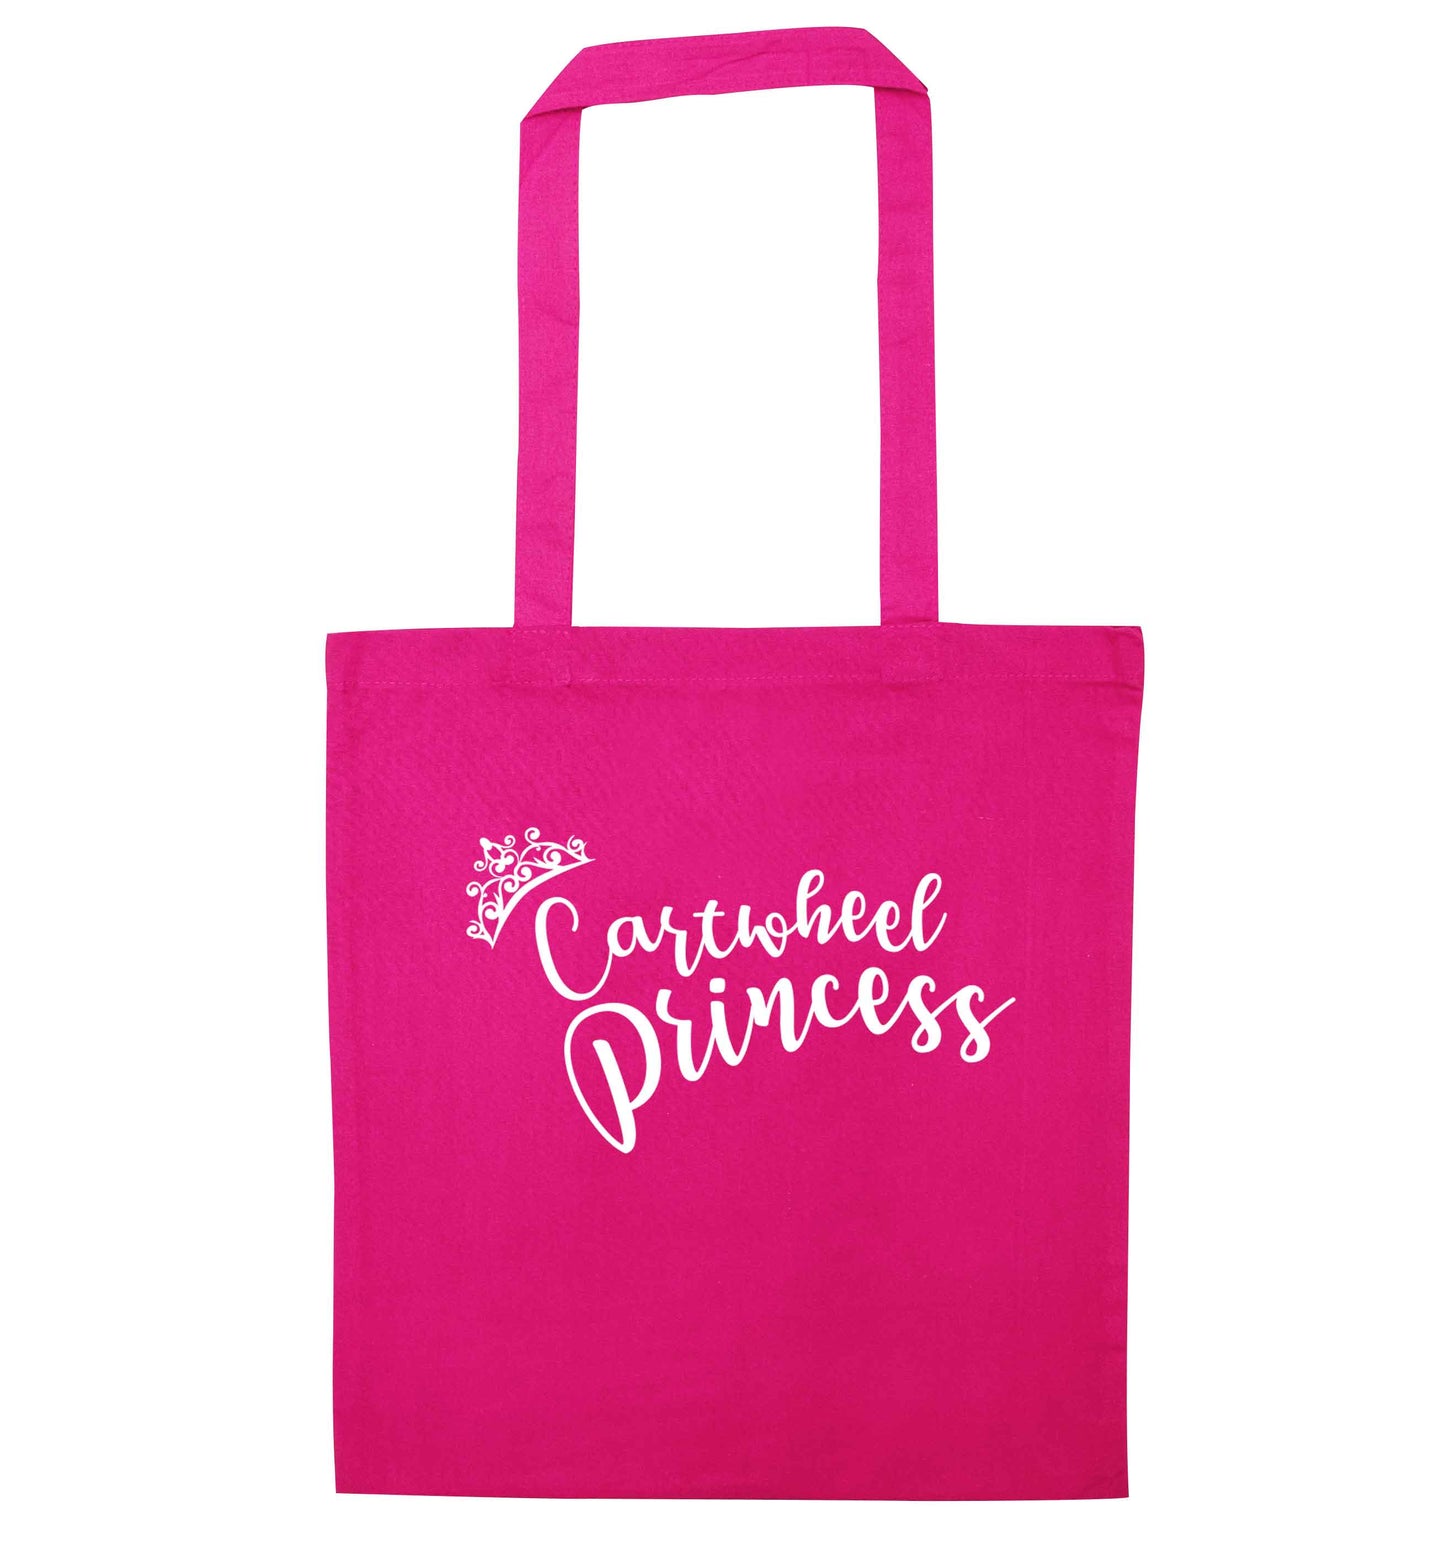 Cartwheel princess pink tote bag